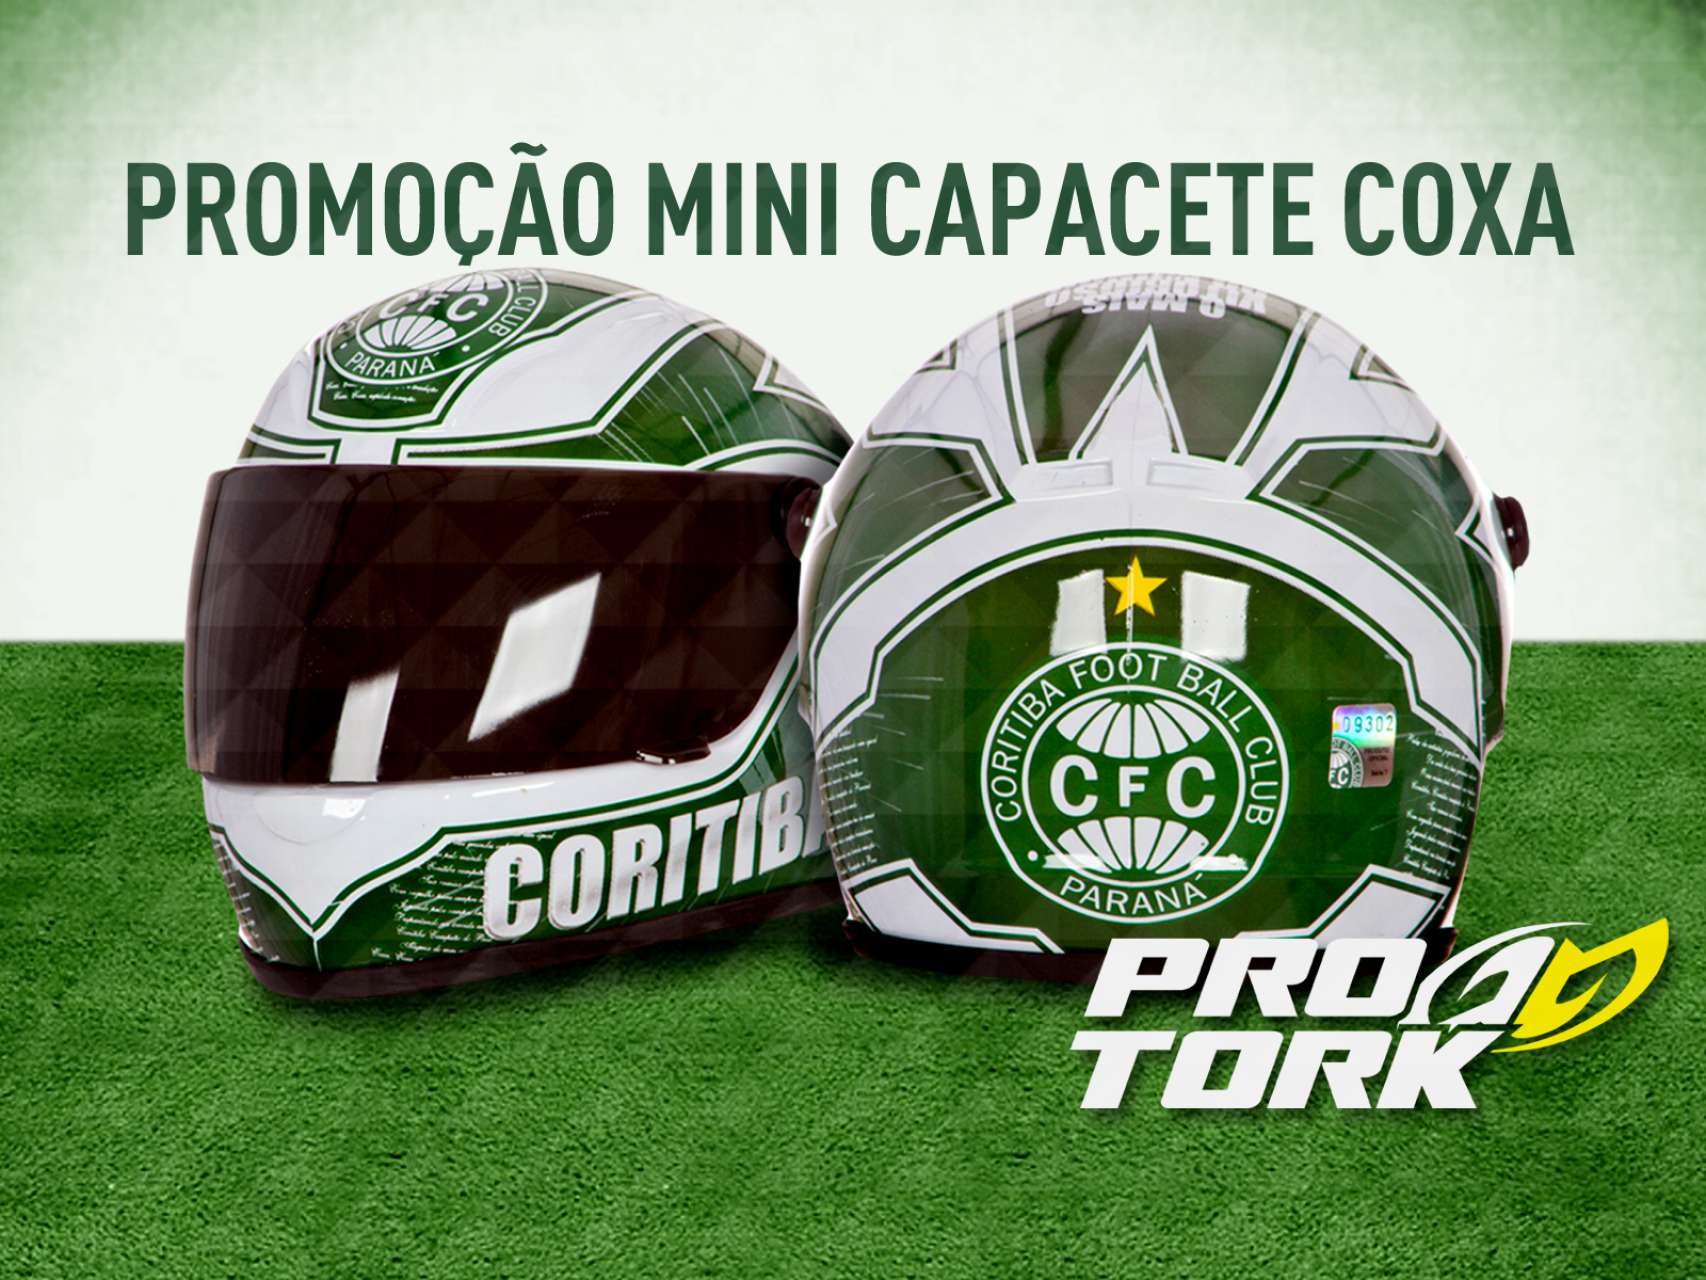 Mini capacete do Coritiba 